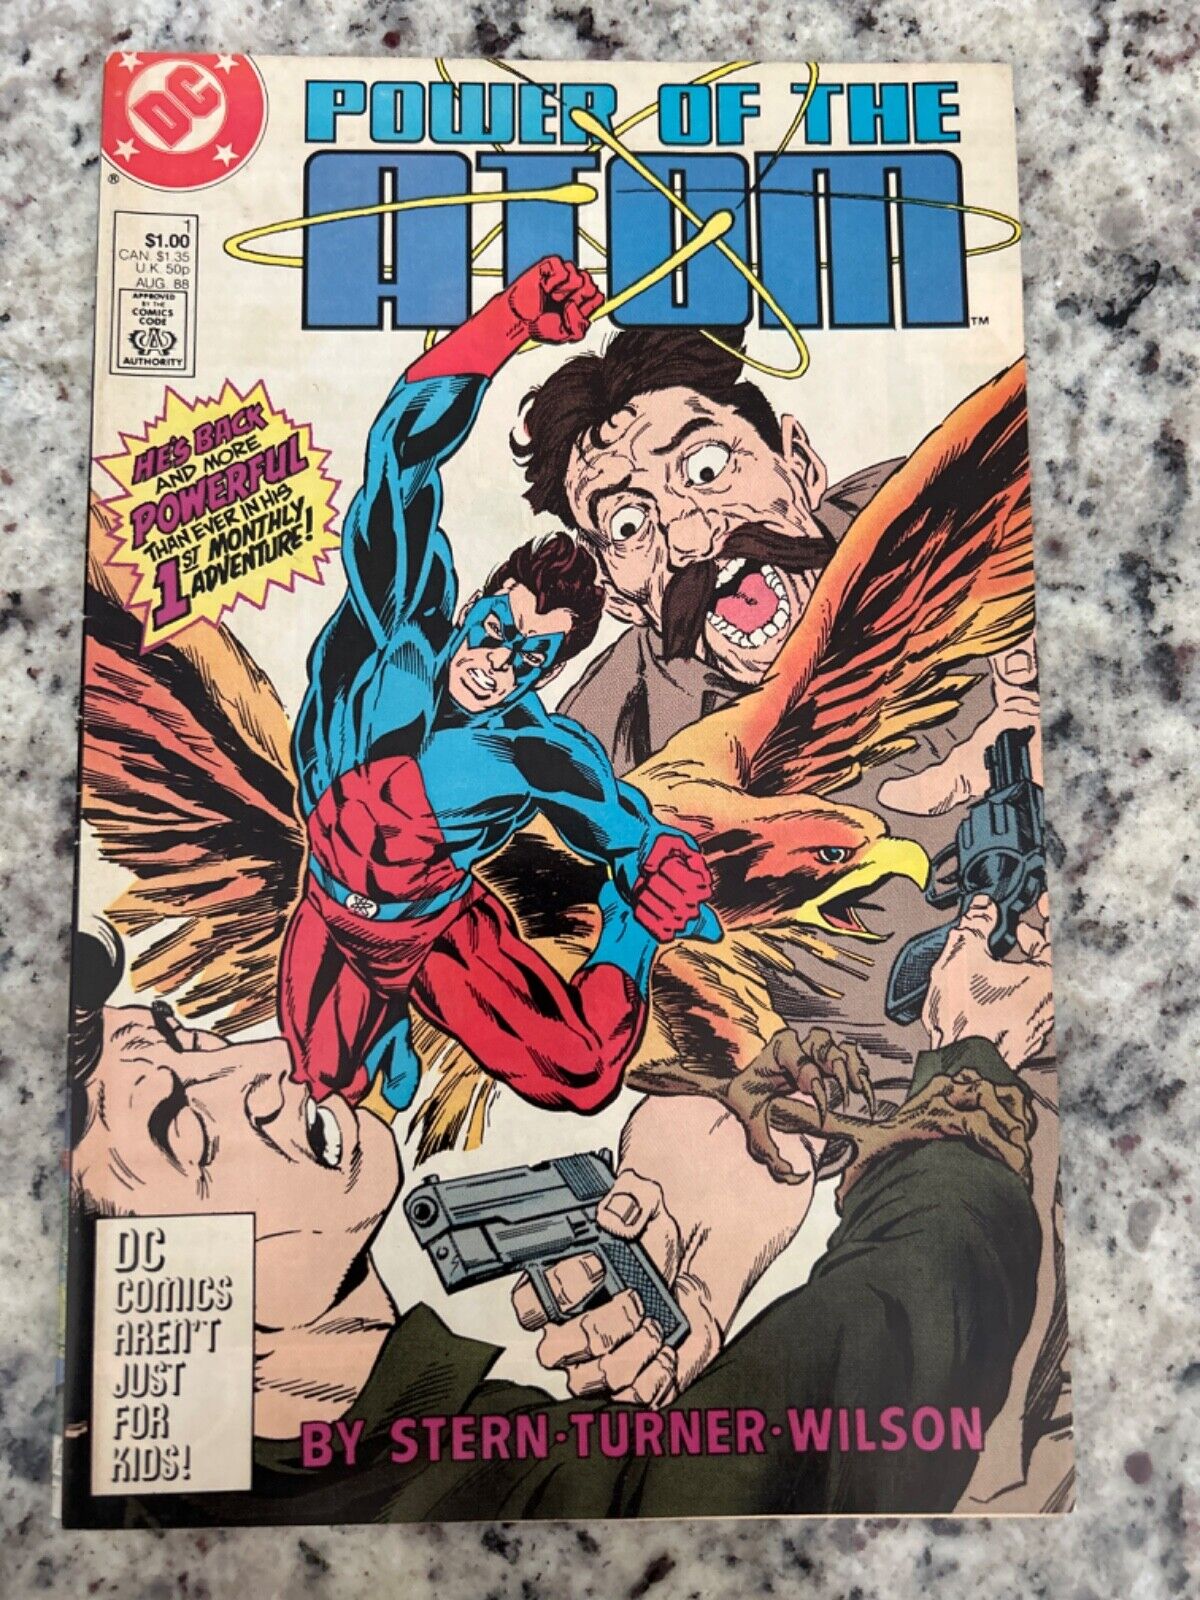 Power of the Atom #1 Vol. 1 (DC, 1988) ungraded